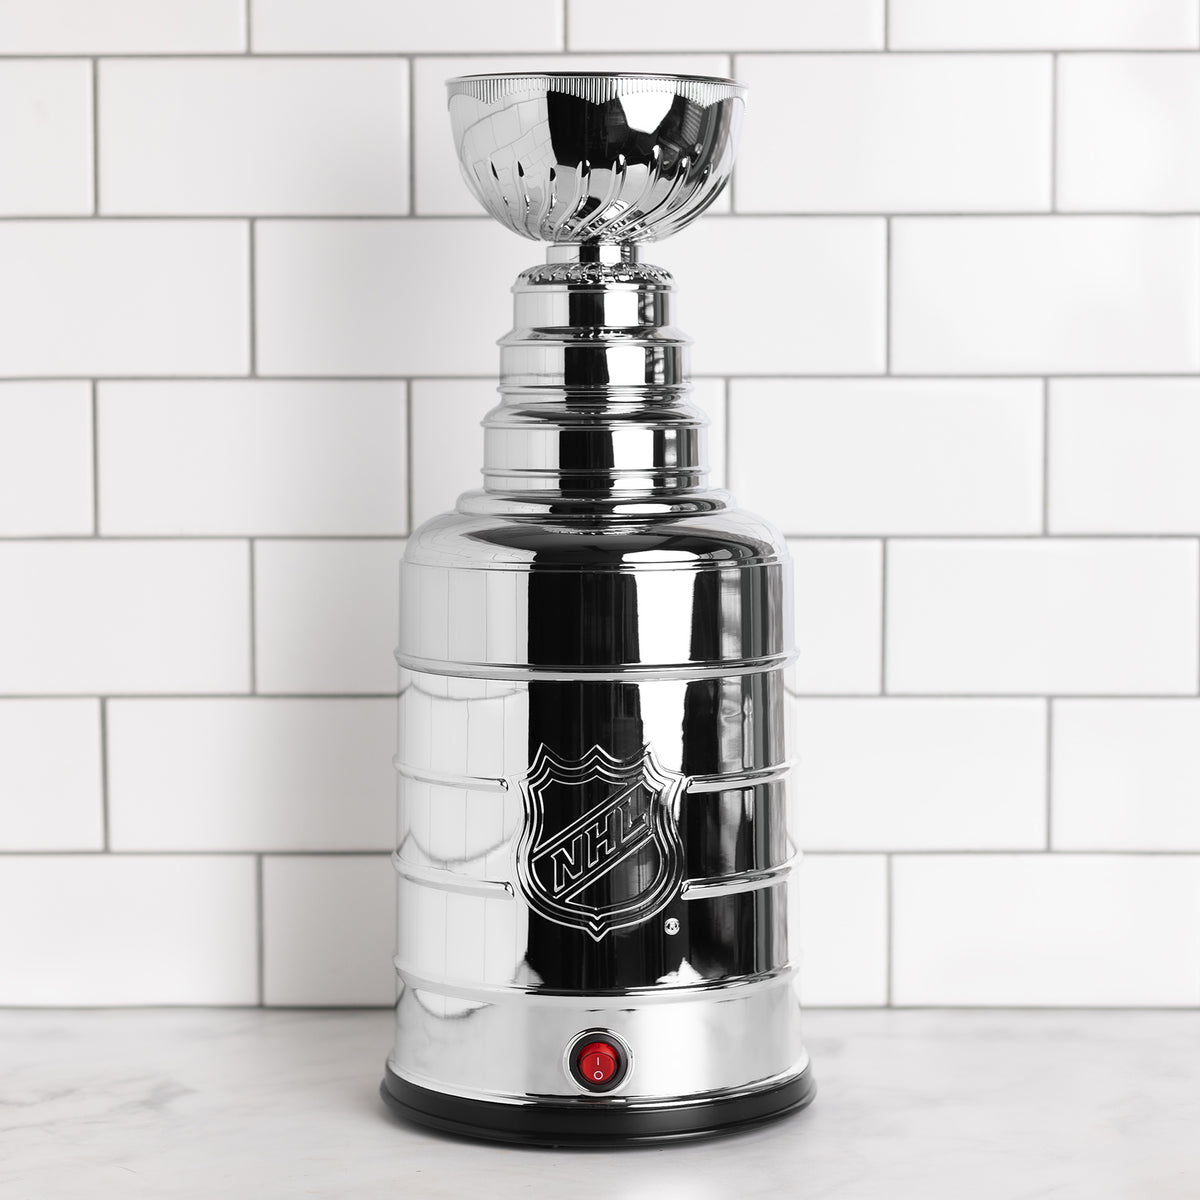 NHL Mini Stanley Cup Replicas